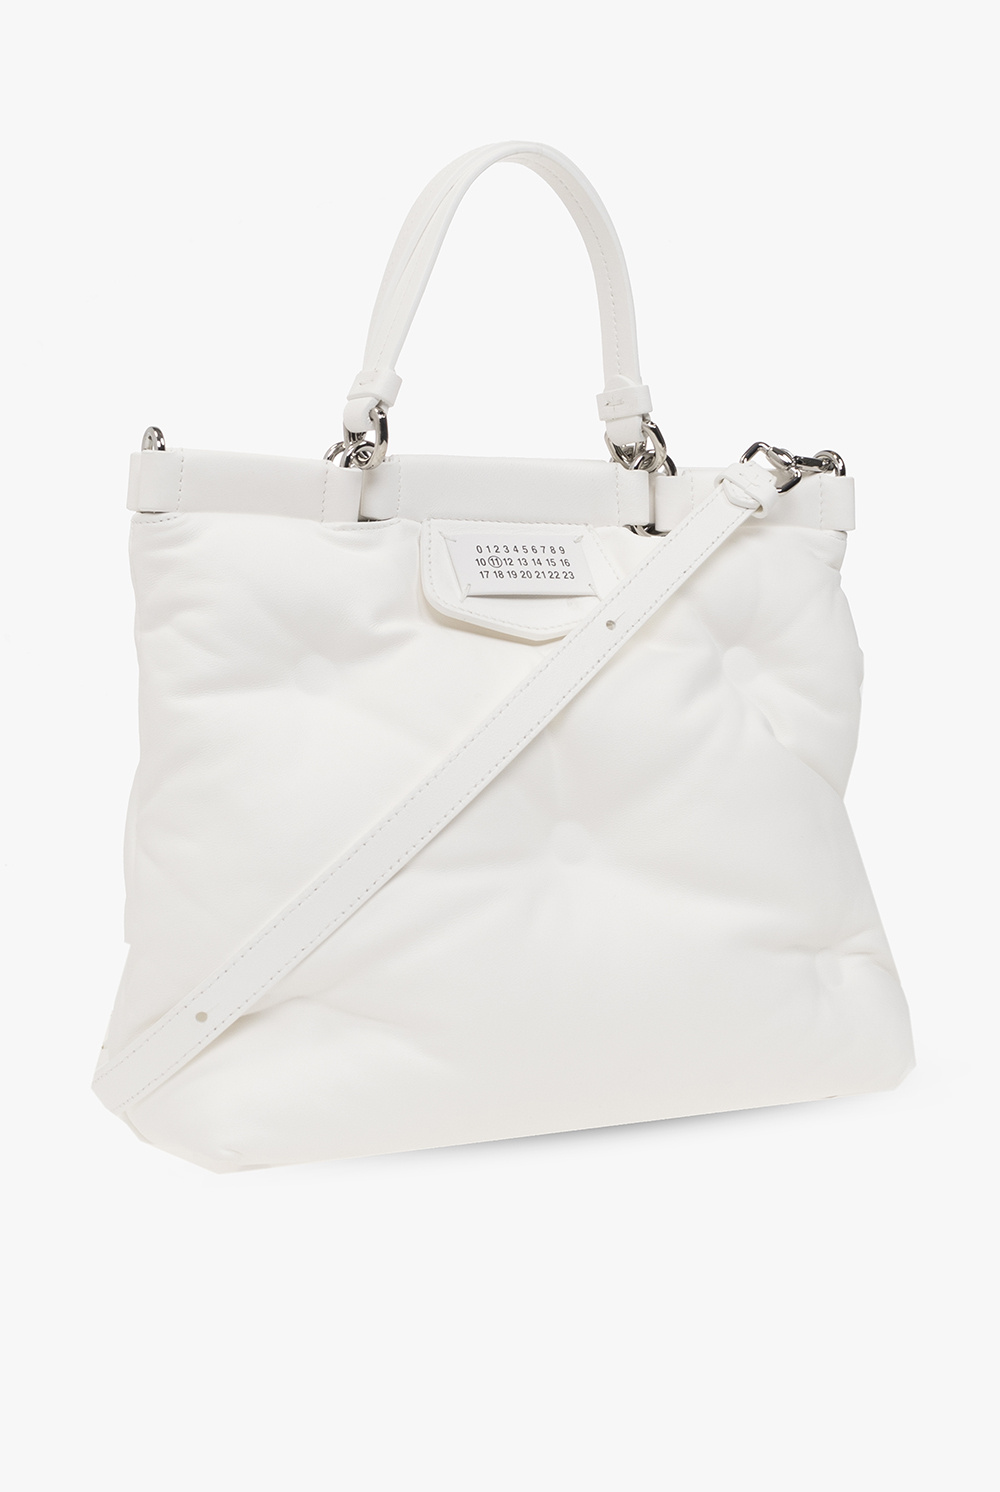 Maison Margiela ‘Glam Slam Small’ shoulder ELITE bag